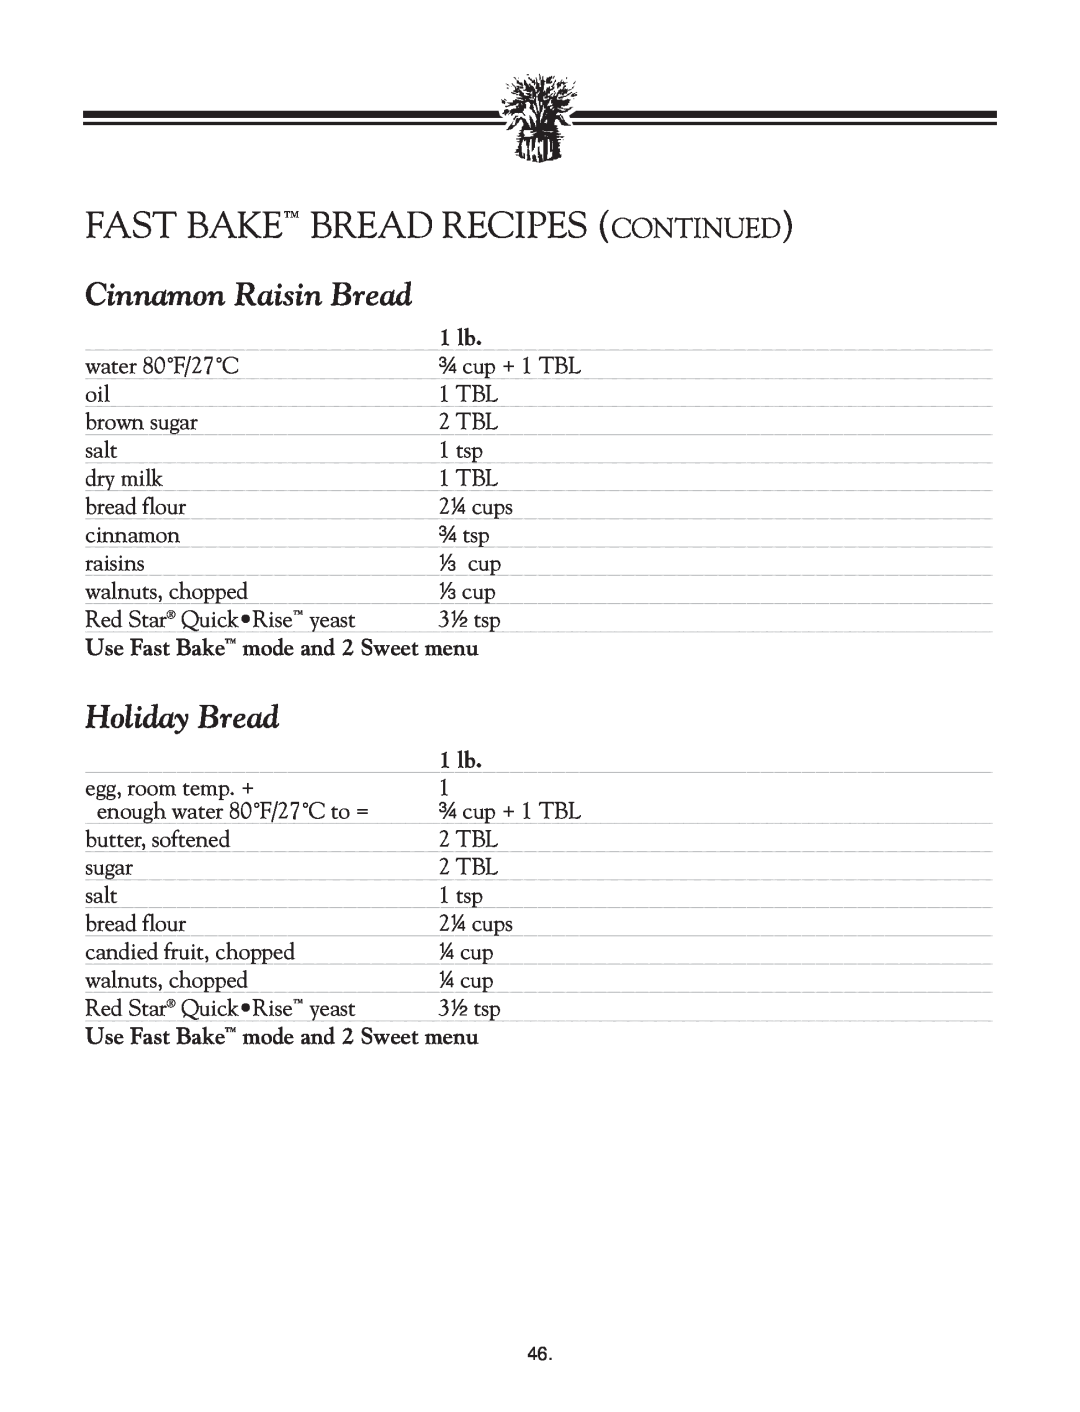 Breadman TR2828G instruction manual Fast Bake Bread Recipes Continued, Holiday Bread, Cinnamon Raisin Bread 